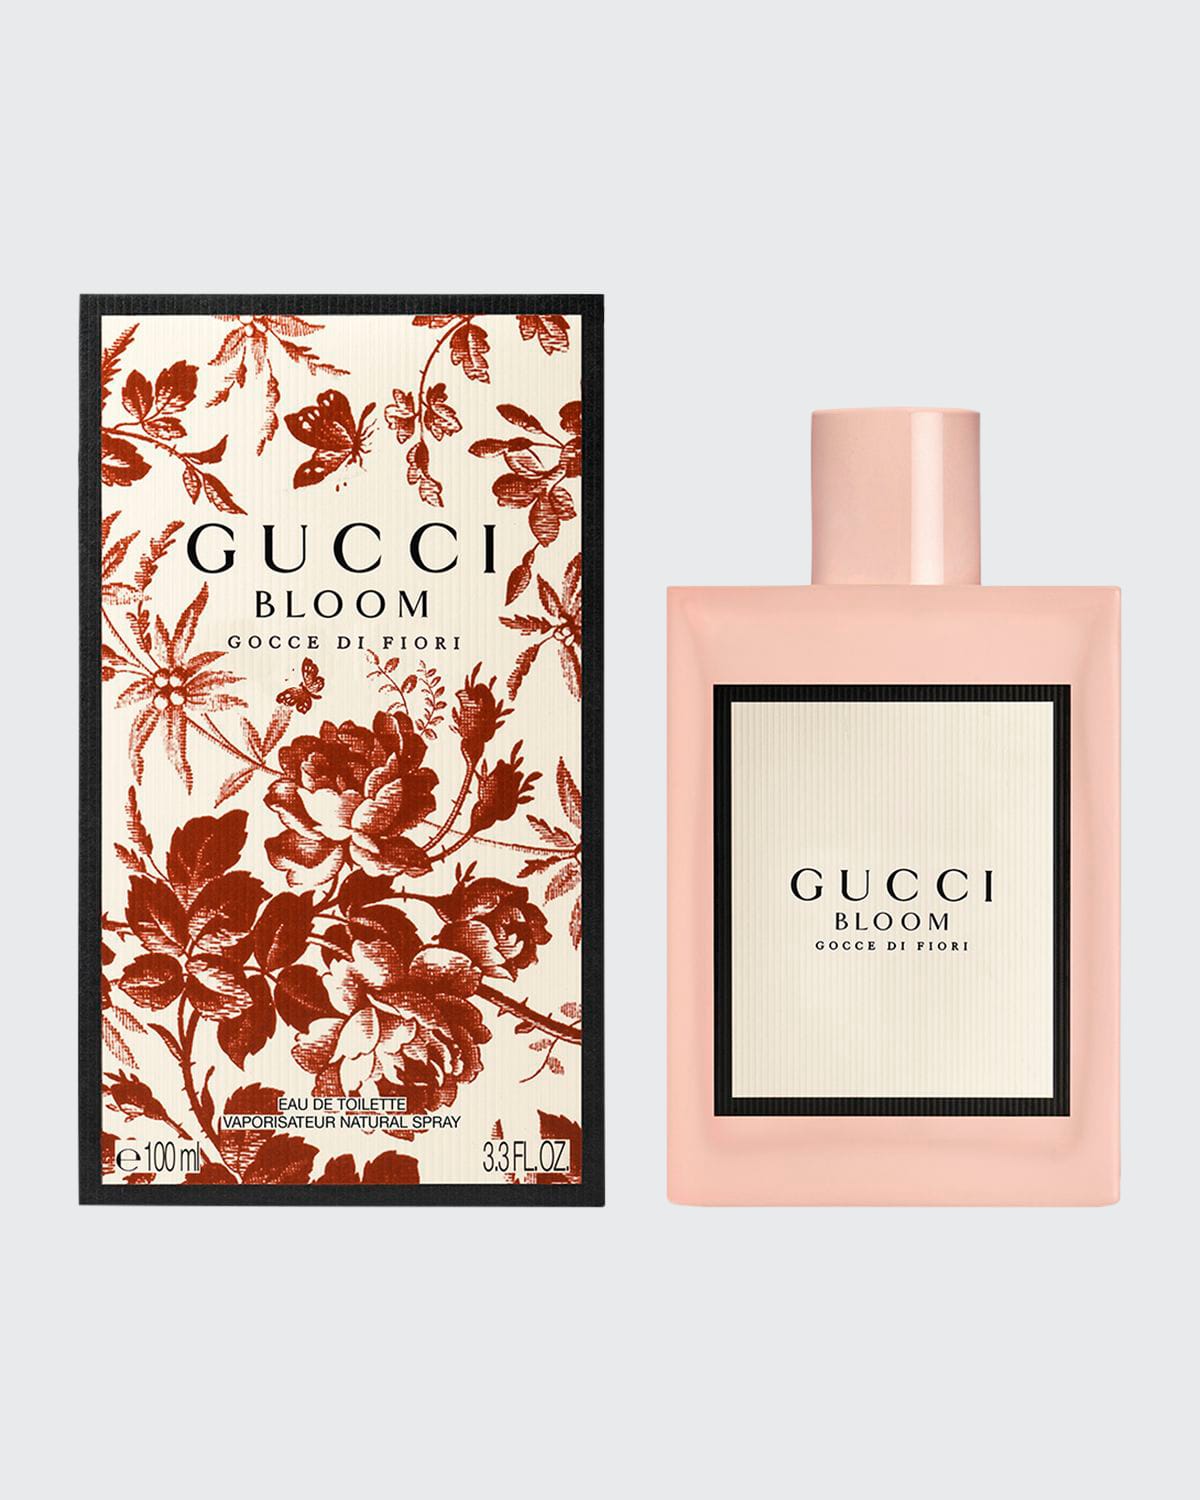 3.3 oz. Gucci Bloom Gocce Di Fiori Eau de Toilette